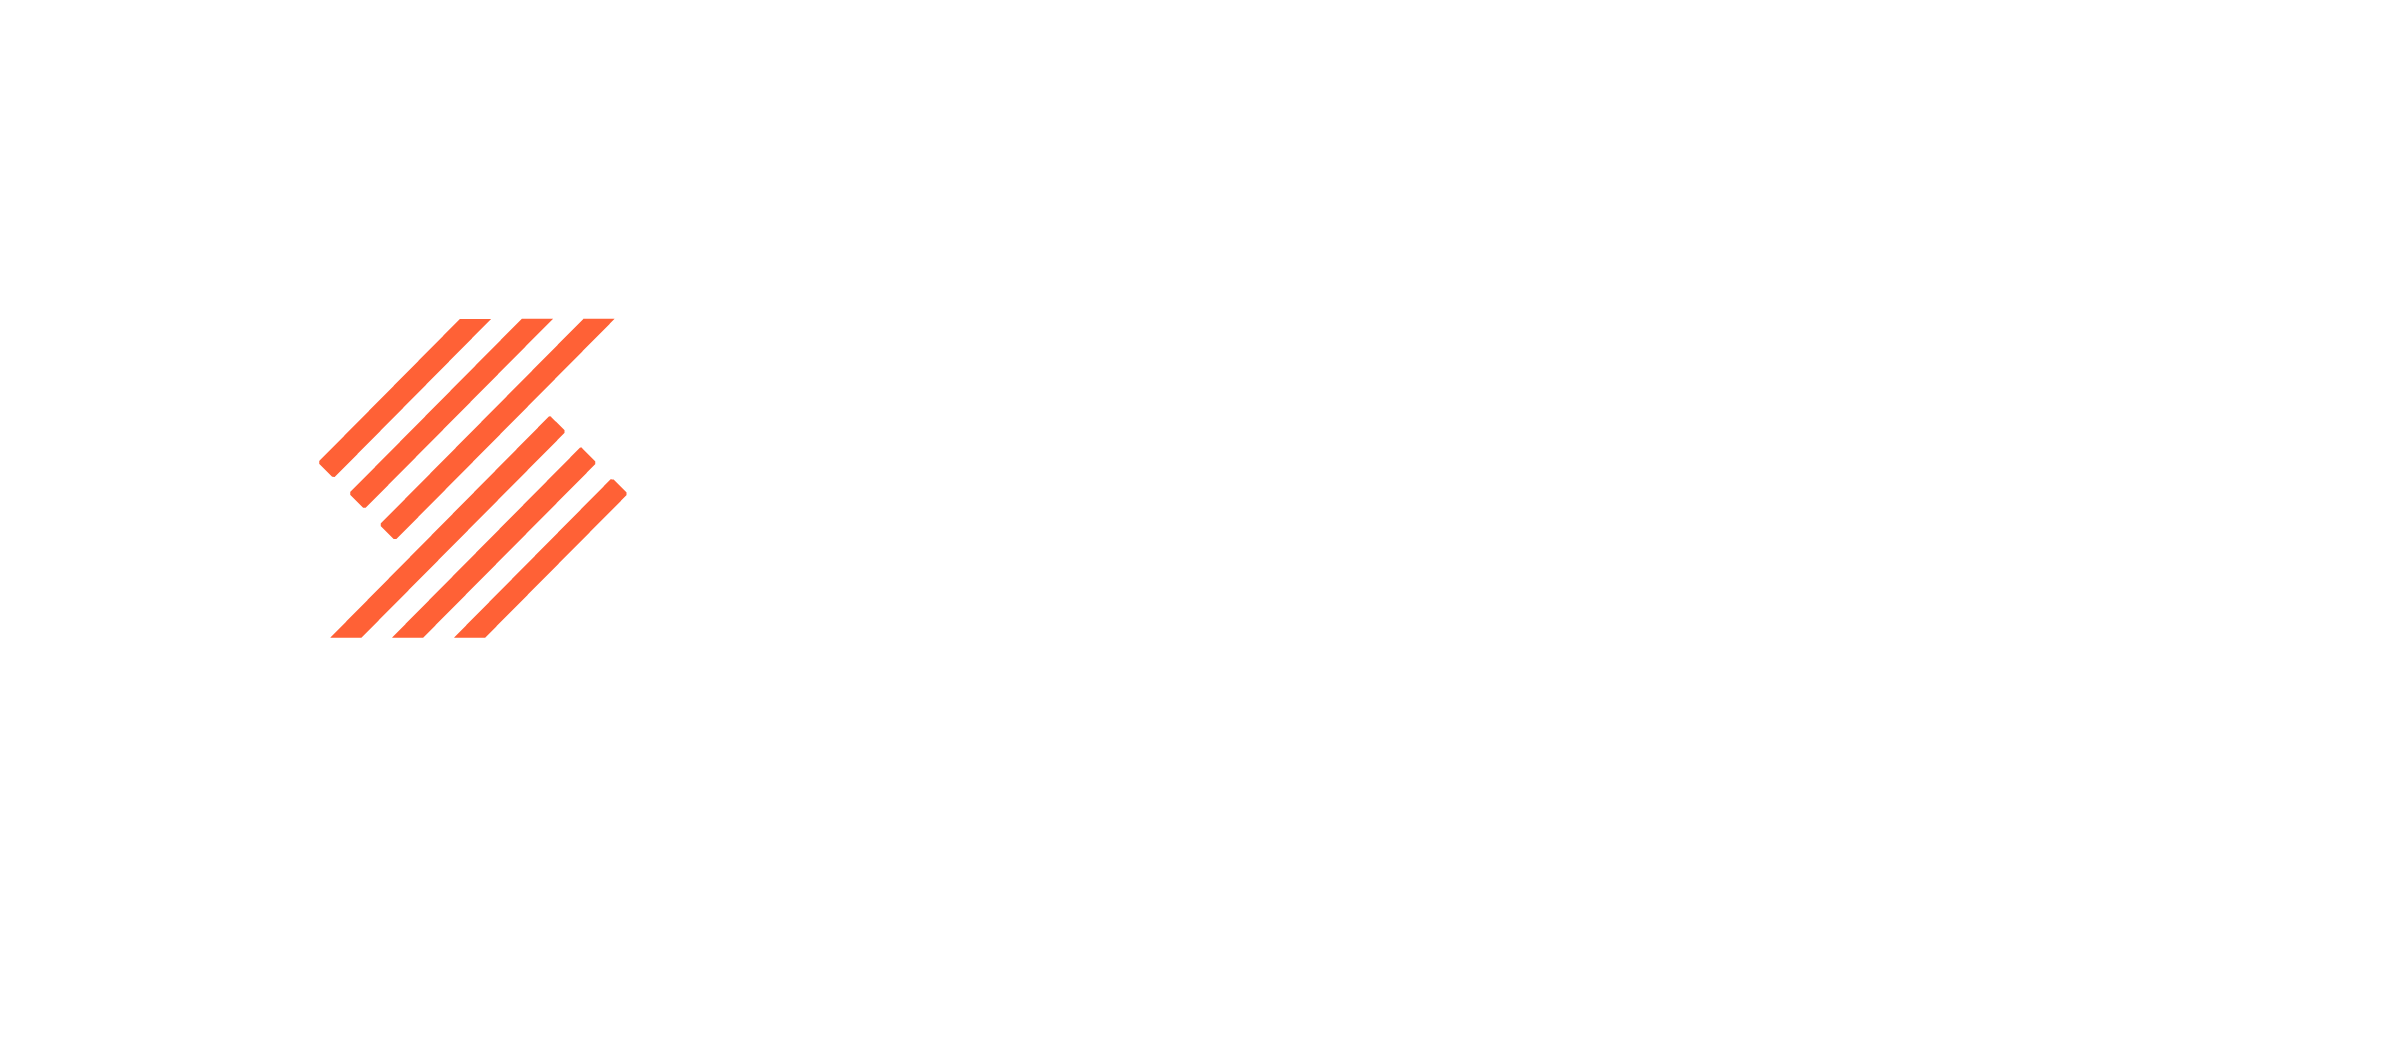 ADAPPS logiciel des avocats by Adwin